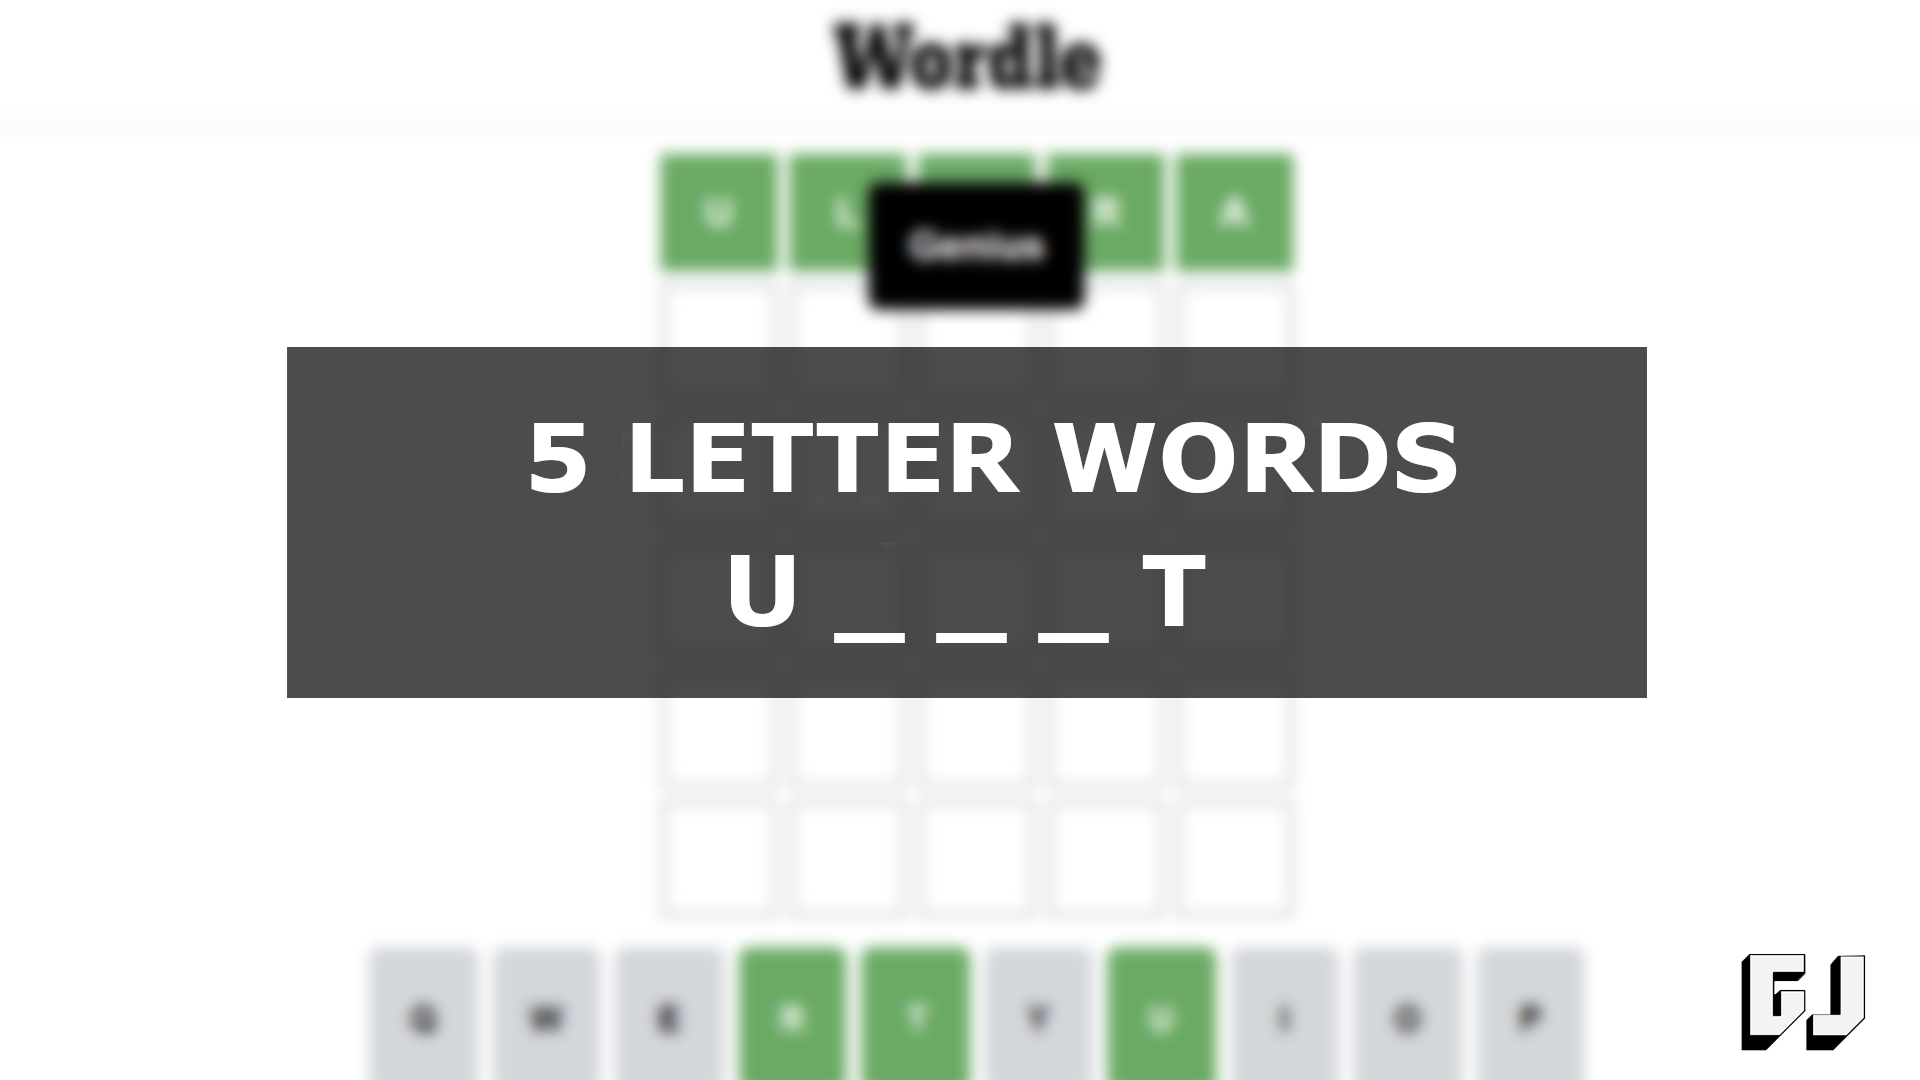 Тинькофф игра слово из 5 букв ответы. Игра 5 букв тинькофф. Слова в тинькофф игра. 5 Letter Words. Слова из пяти букв игра в тинькофф.